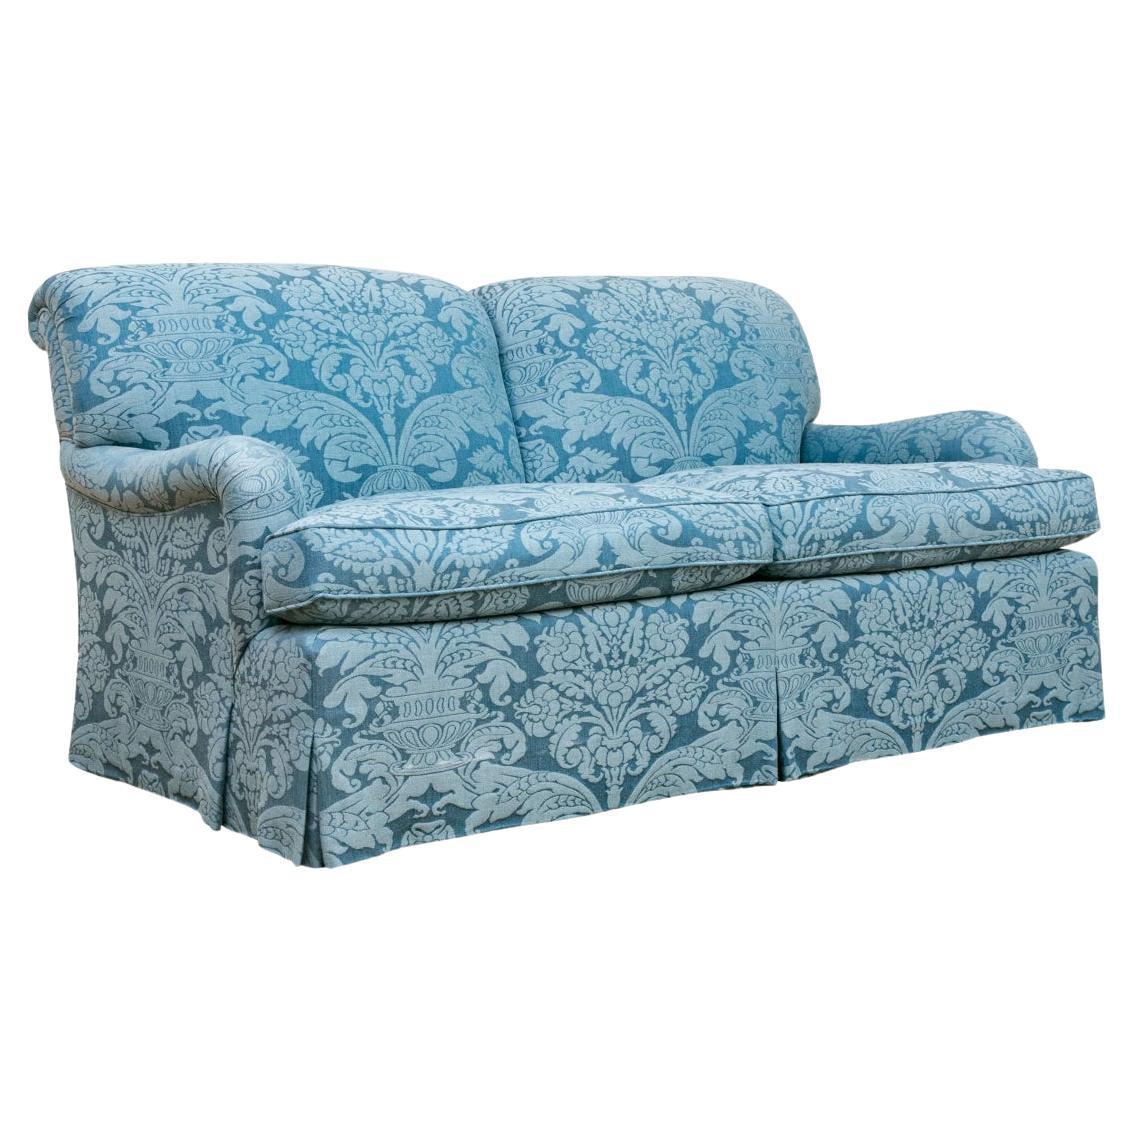 A Fine Custom Made Sofa In George Smith Style